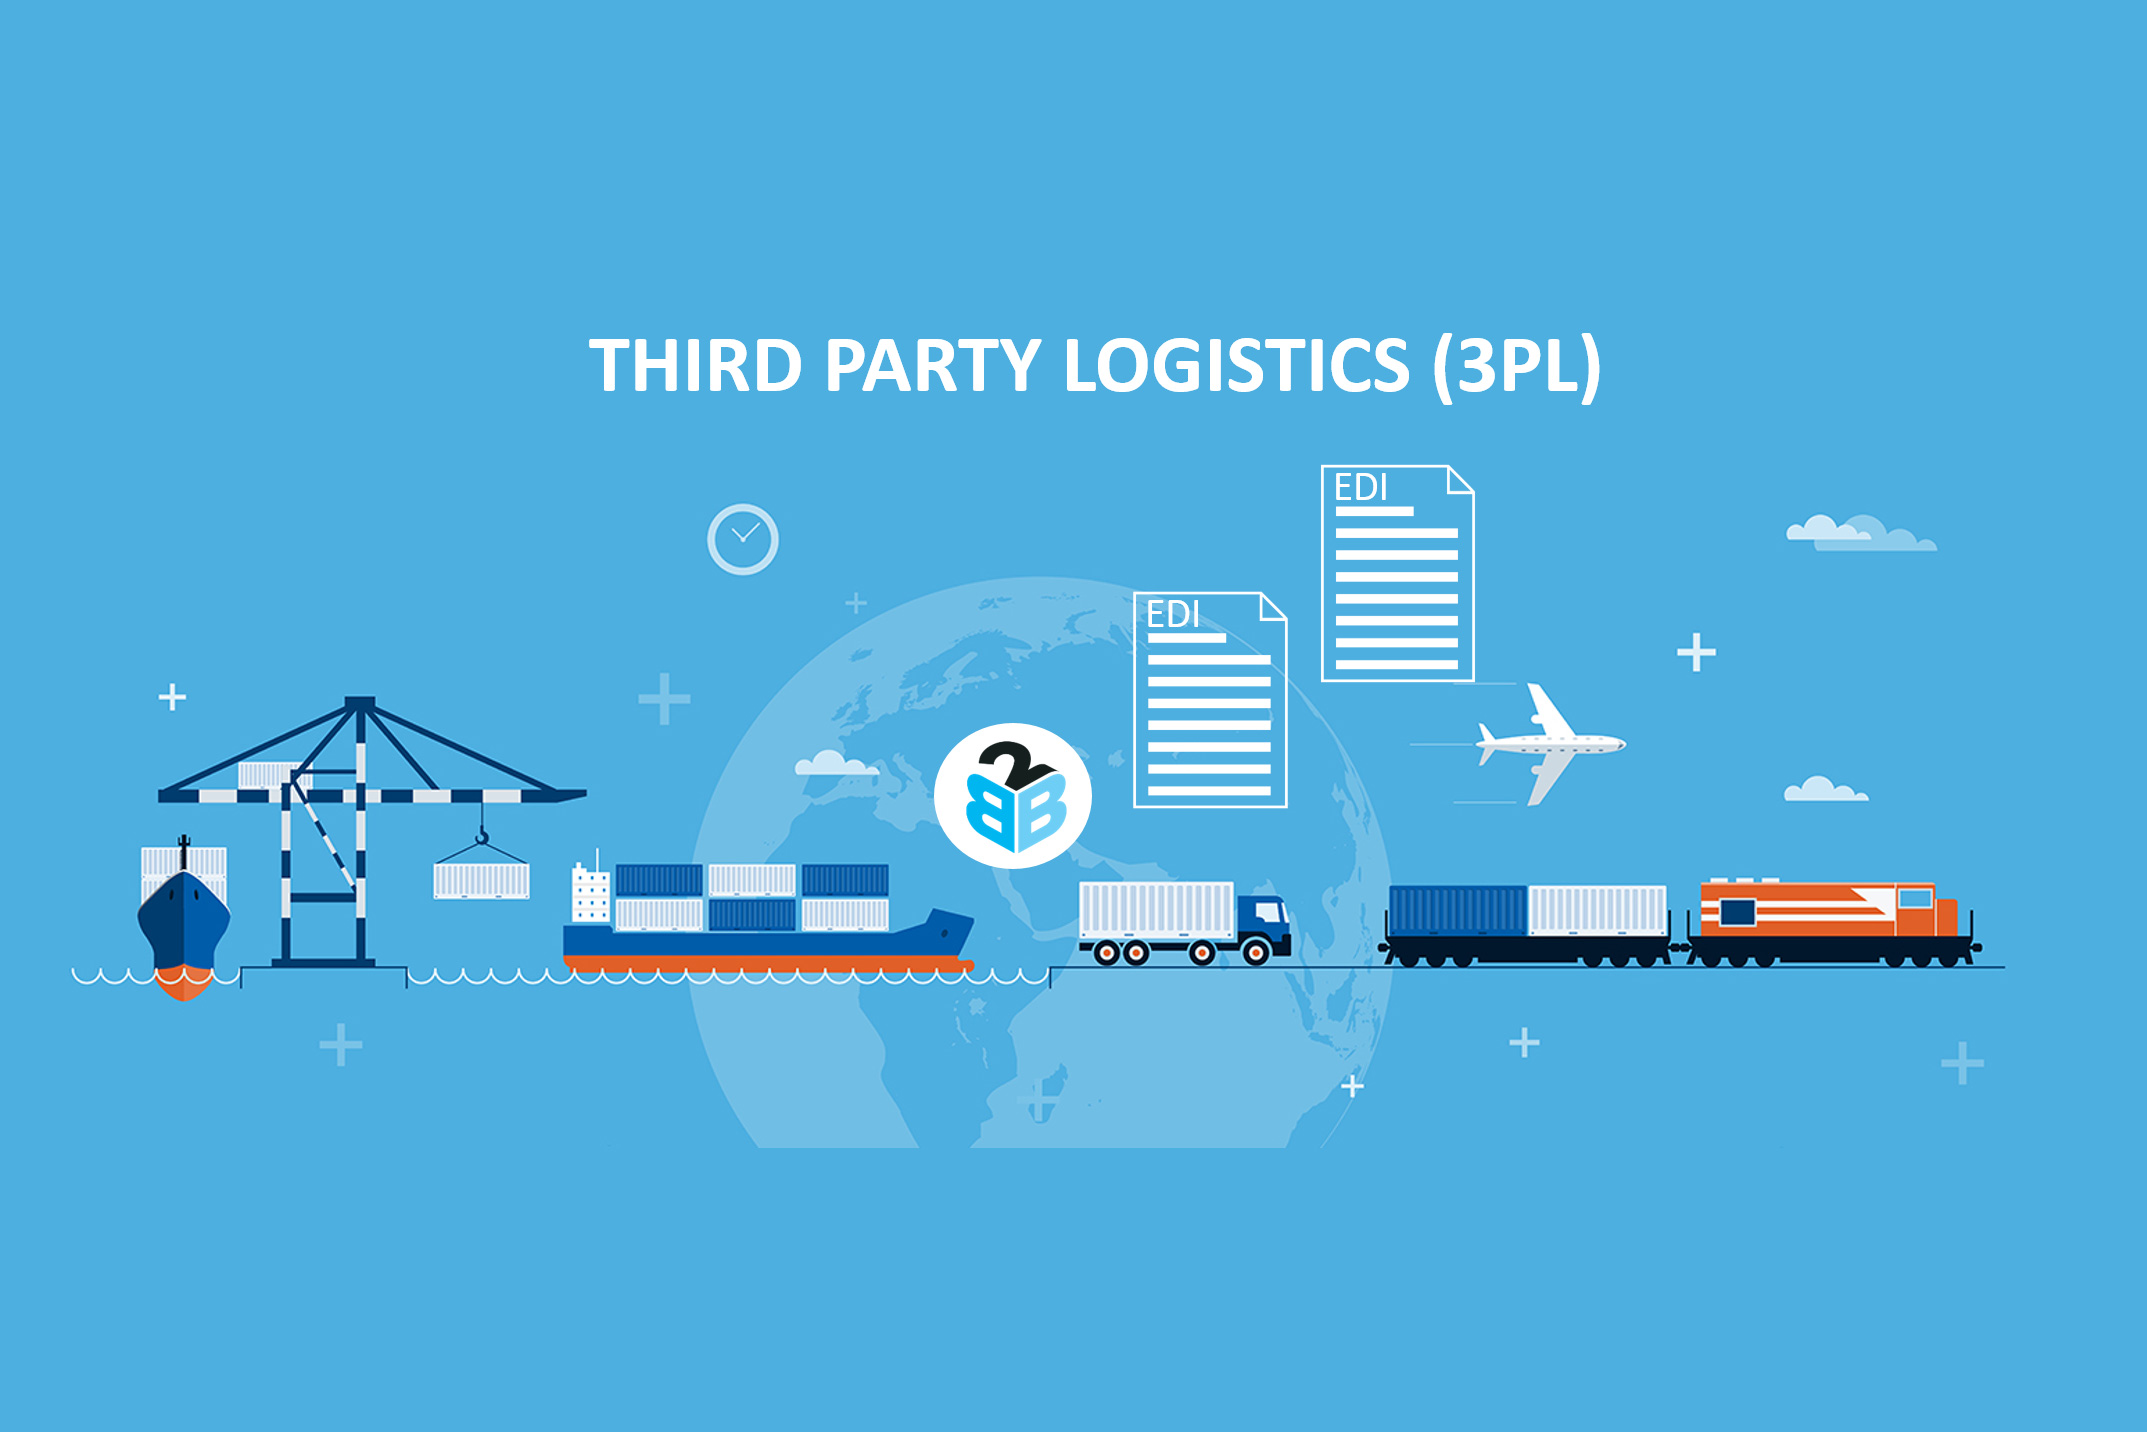 3PL) Third Party Logistics Providers